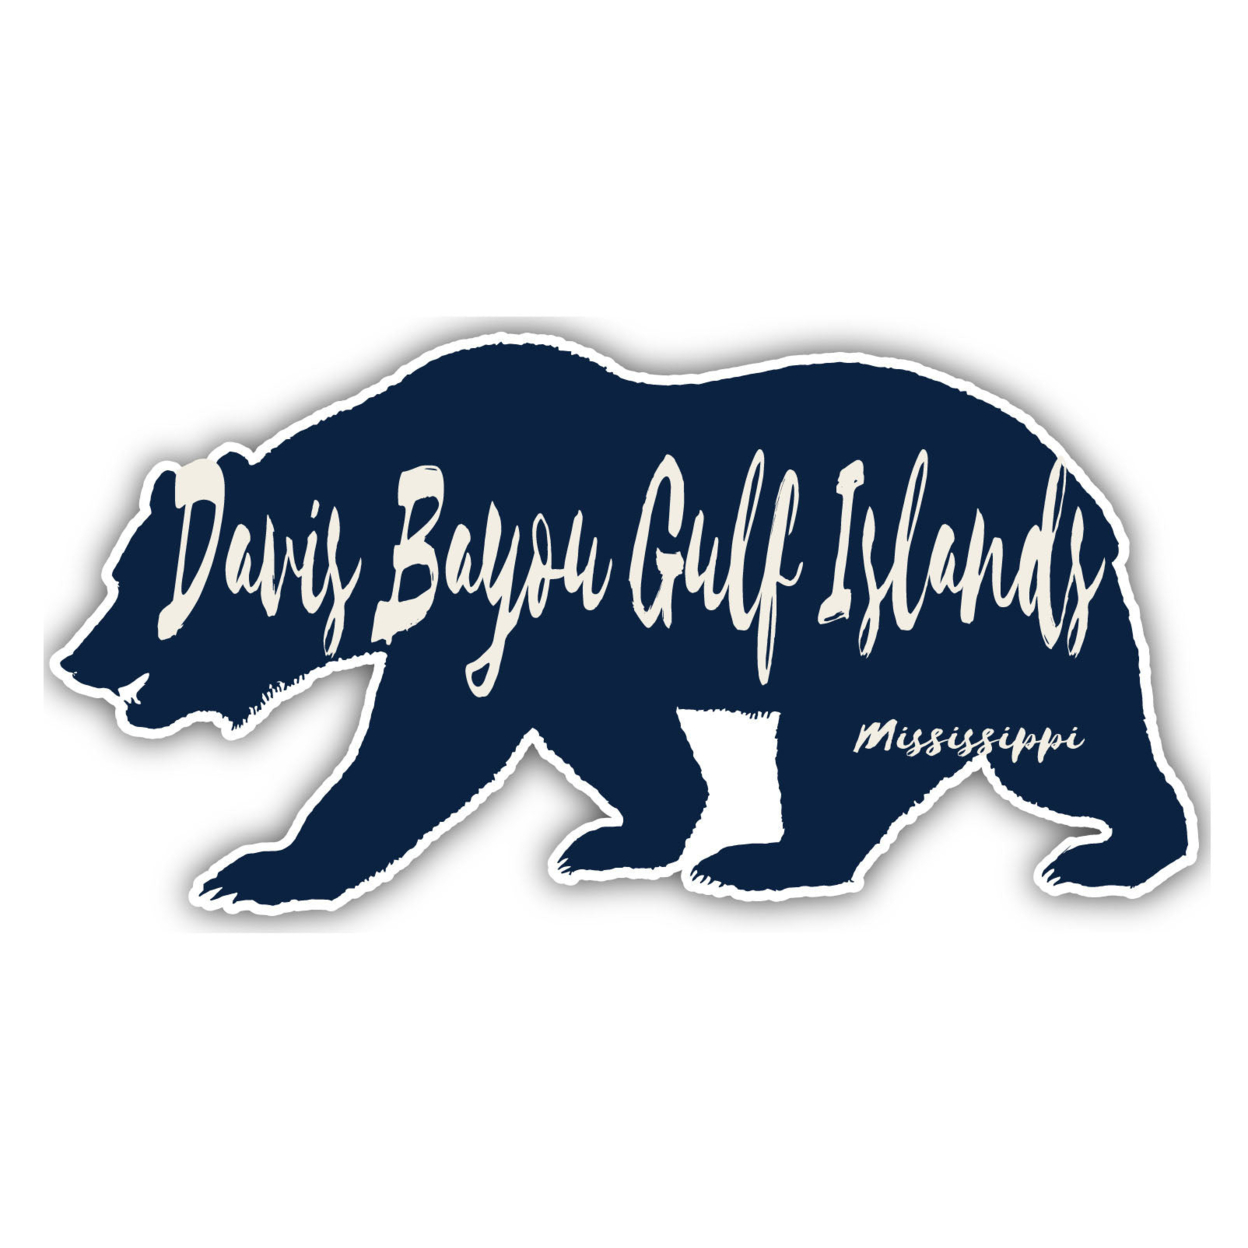 Davis Bayou Gulf Islands Mississippi Souvenir Decorative Stickers (Choose Theme And Size) - 4-Pack, 10-Inch, Bear